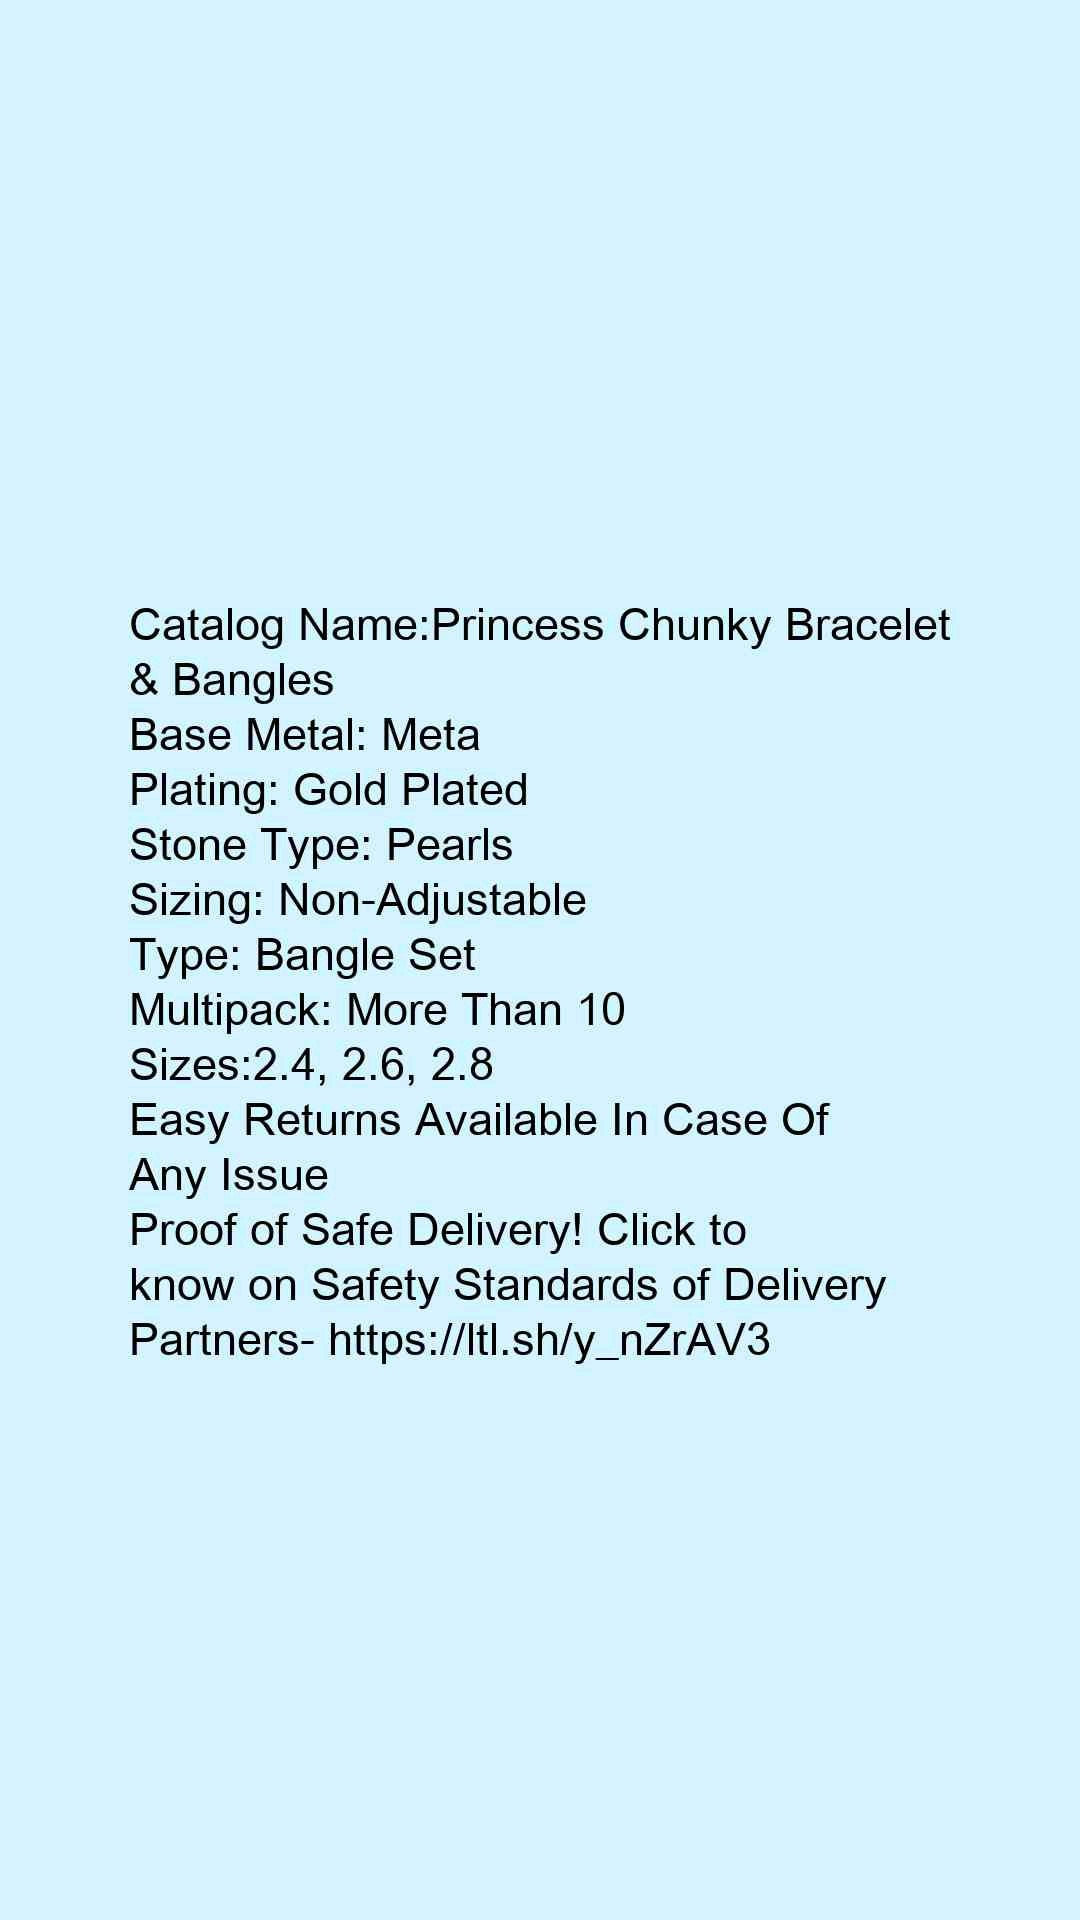 Princess Chunky Bracelet & Bangles